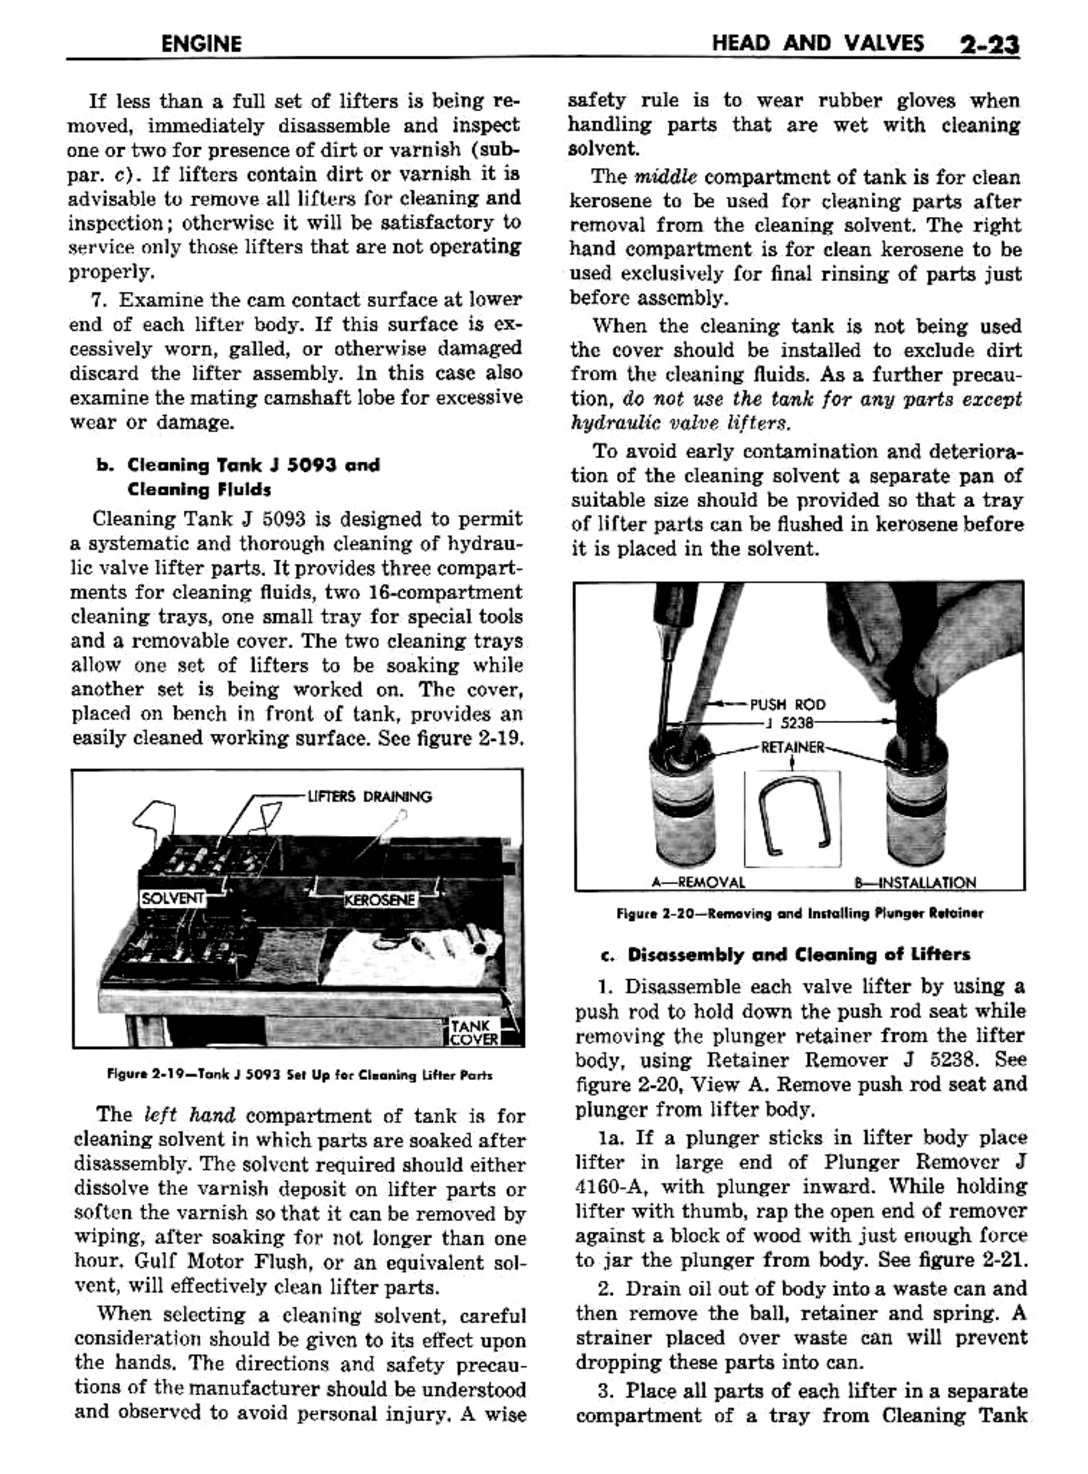 n_03 1957 Buick Shop Manual - Engine-023-023.jpg